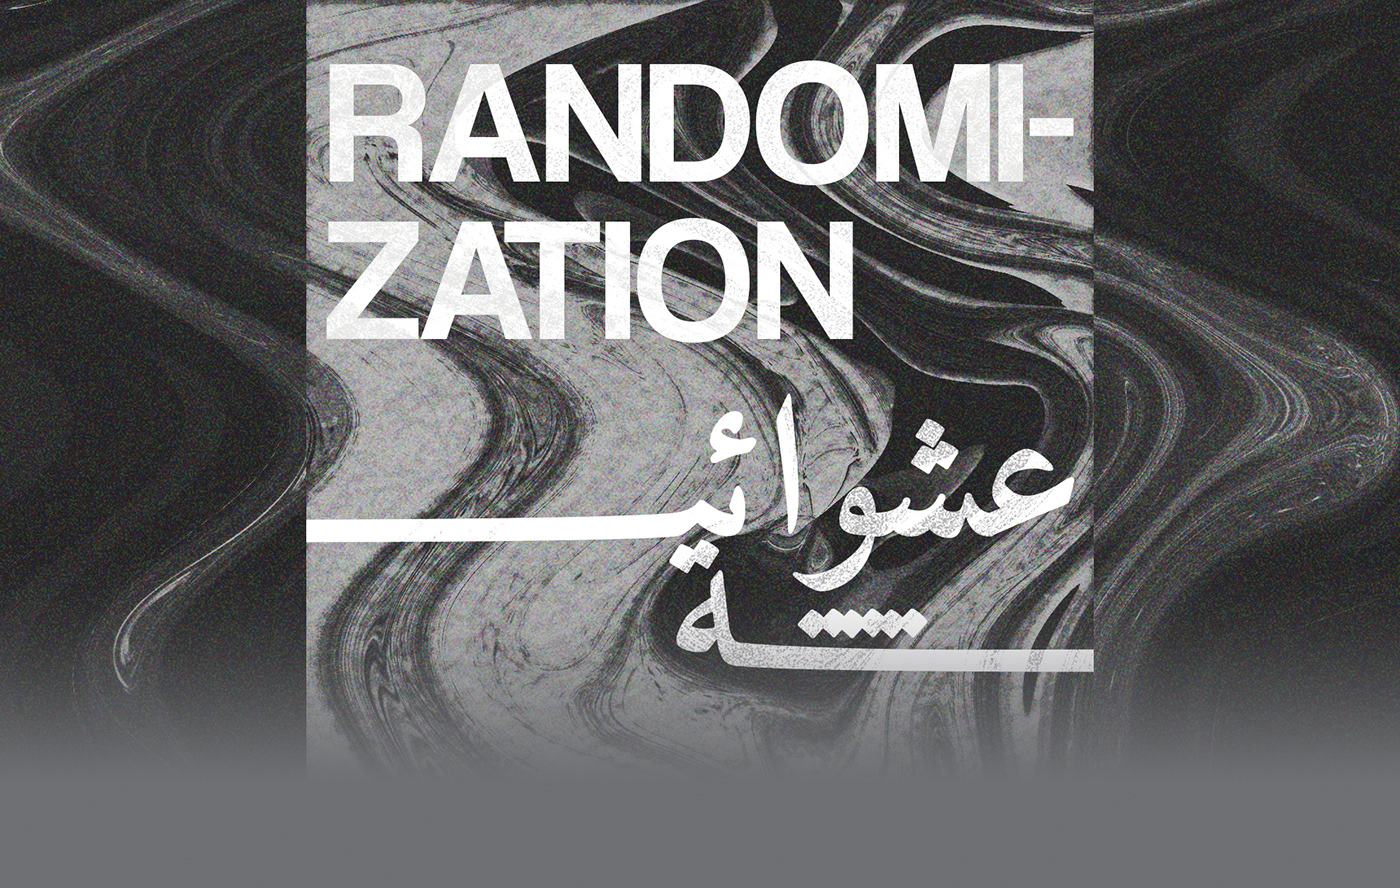 texture typography   arabic typography poster abstract artwork Digital Art  ILLUSTRATION  concept art